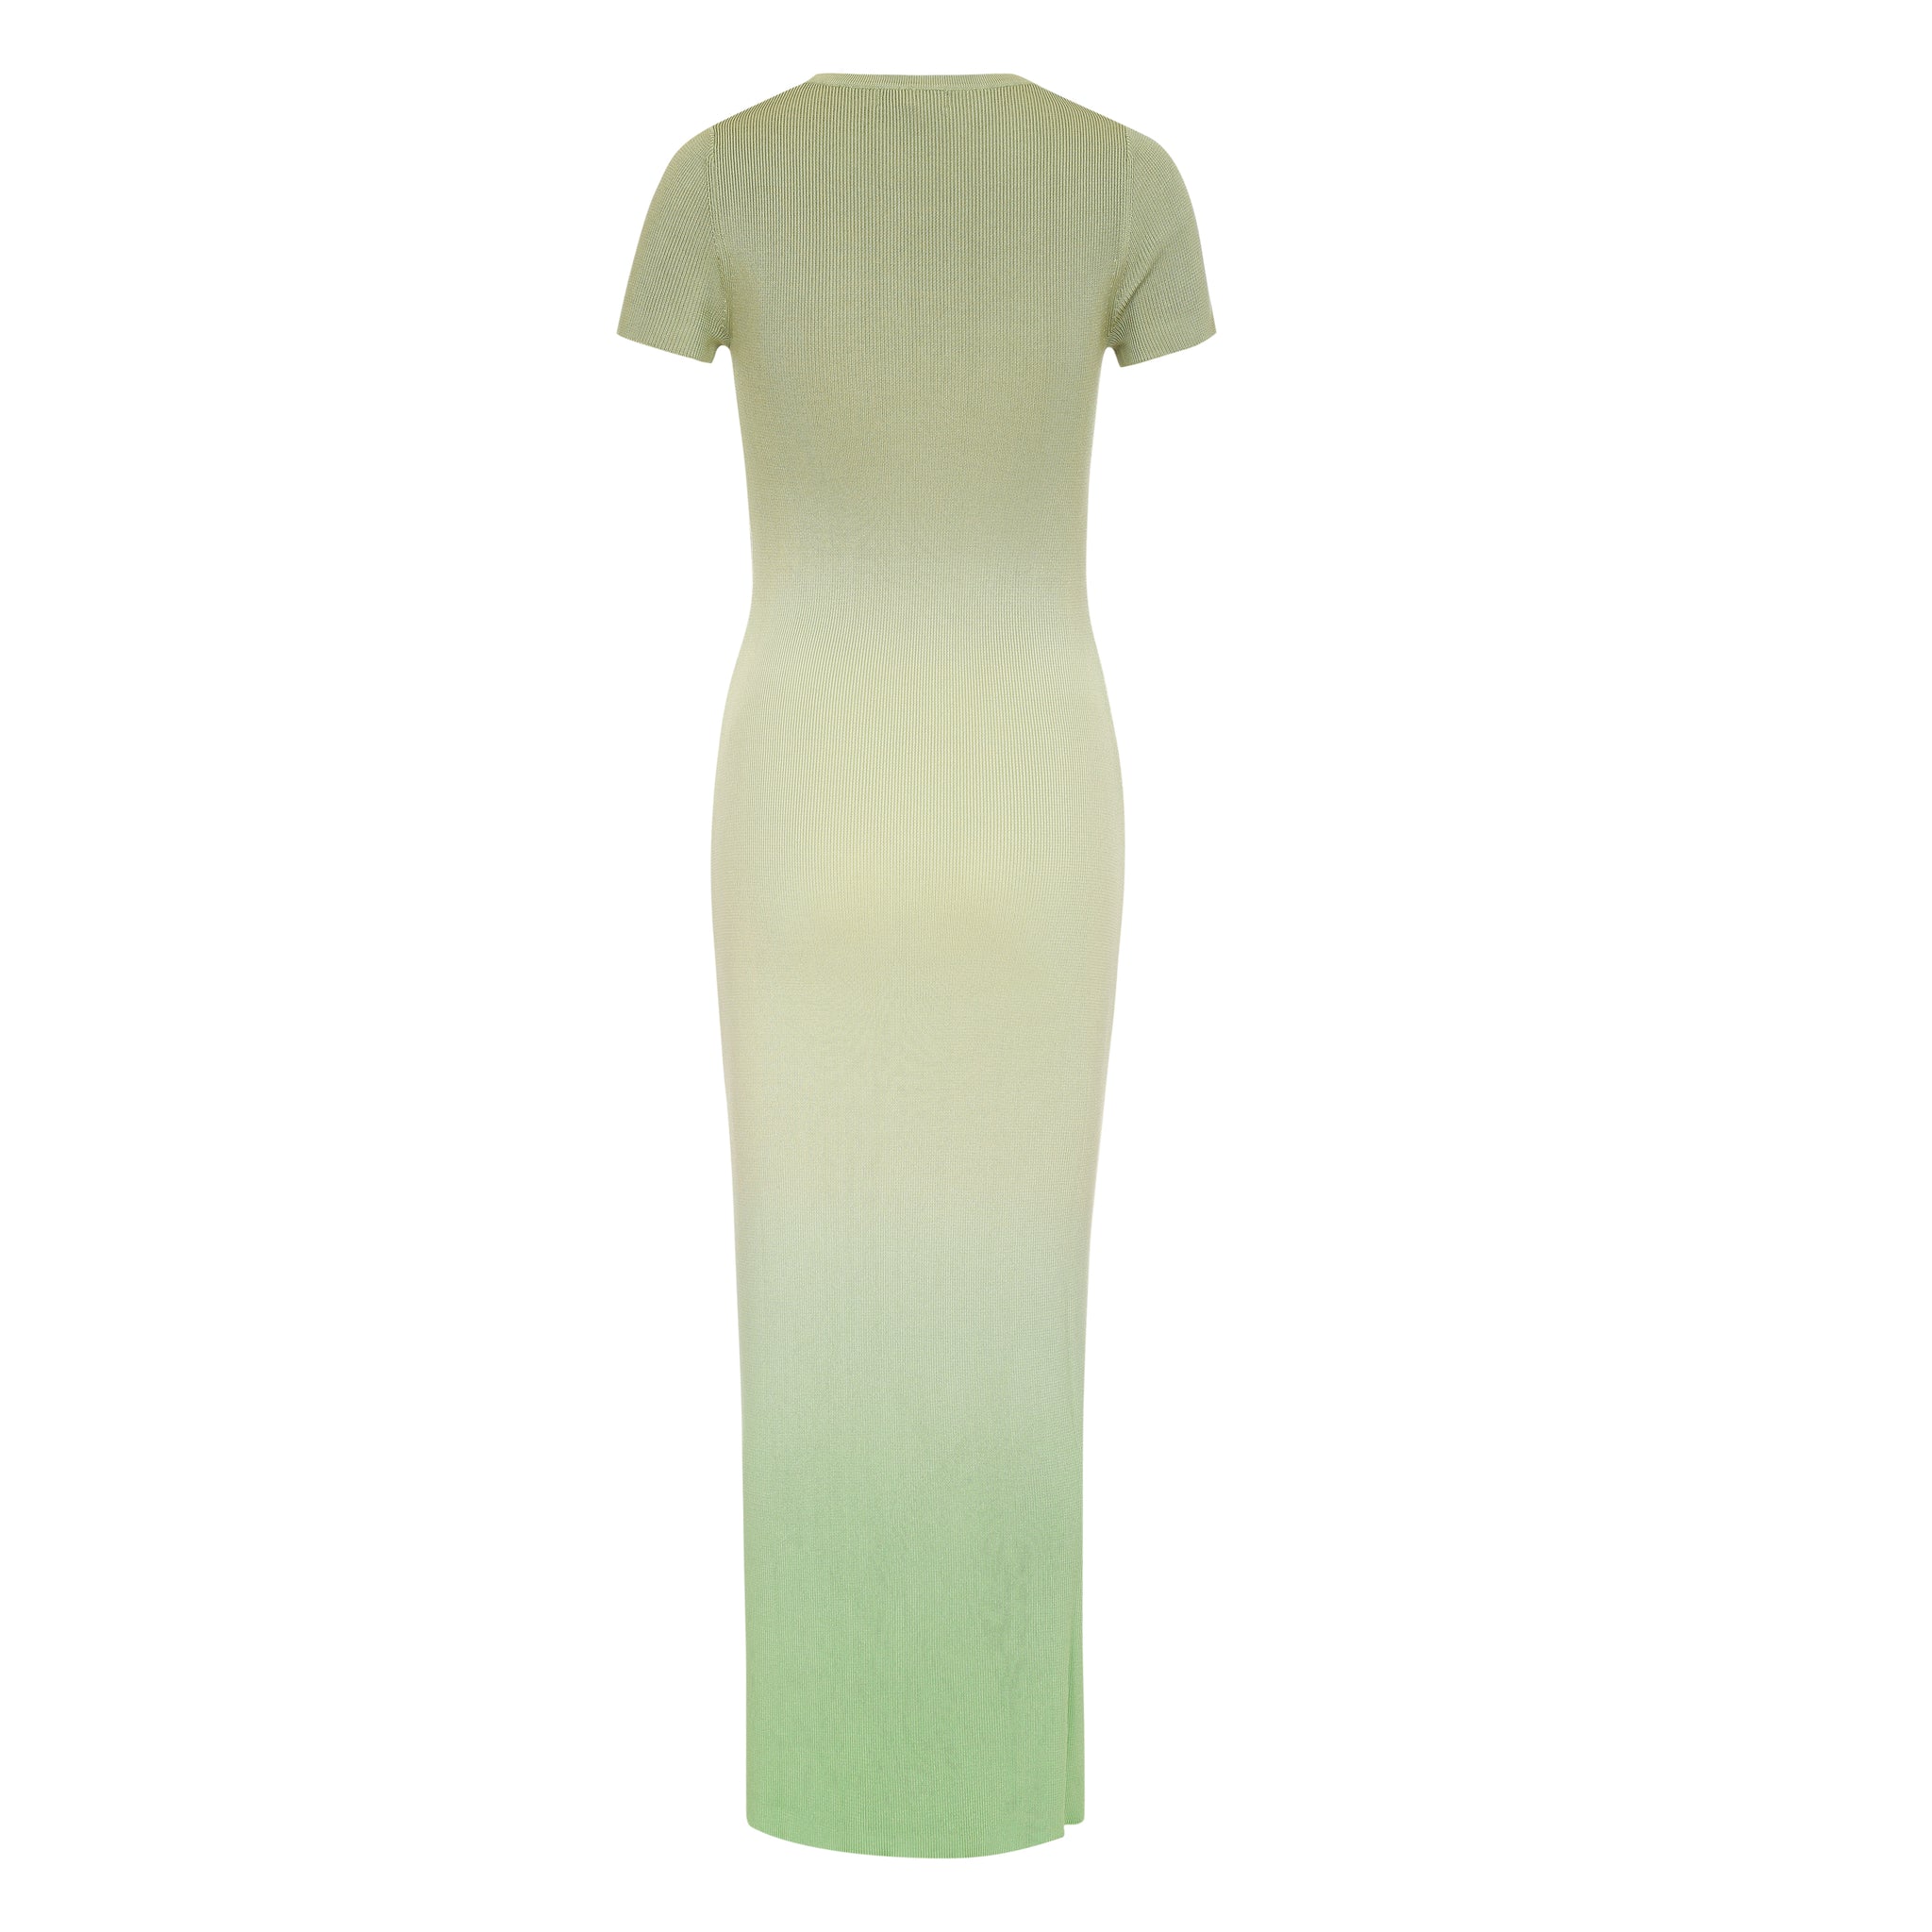 Clover Ombre Dress - Ombre Green